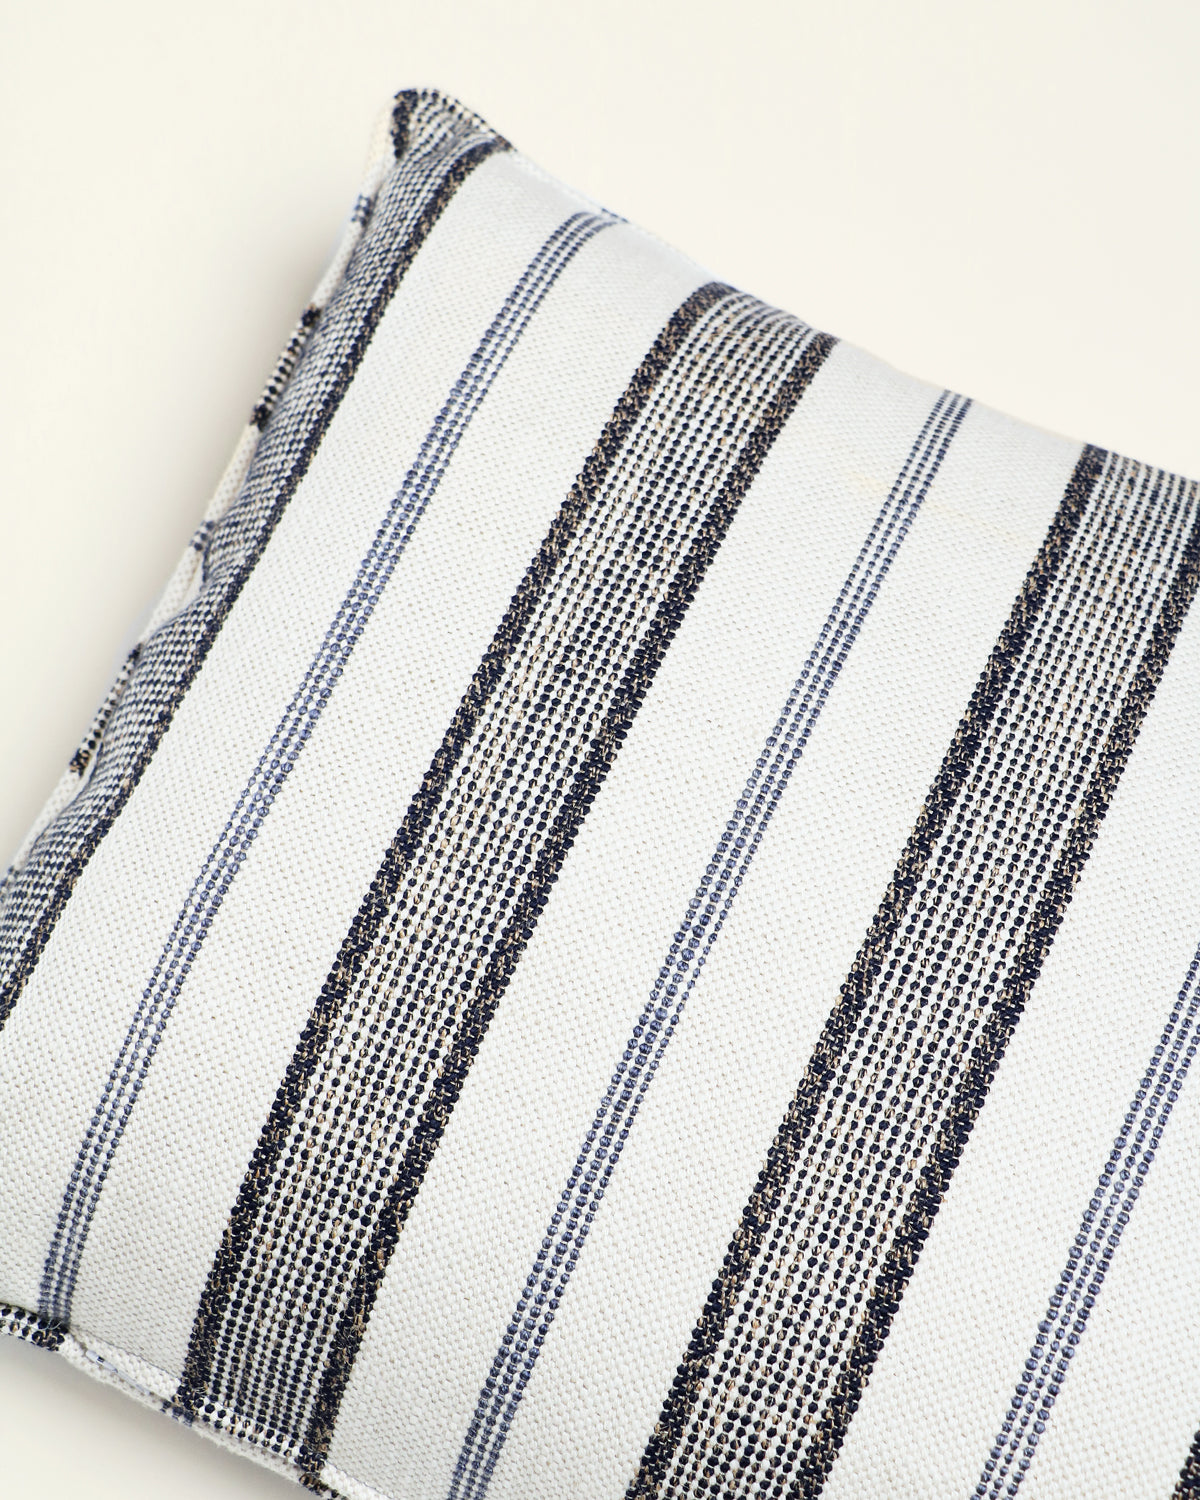 Black and white striped cushion